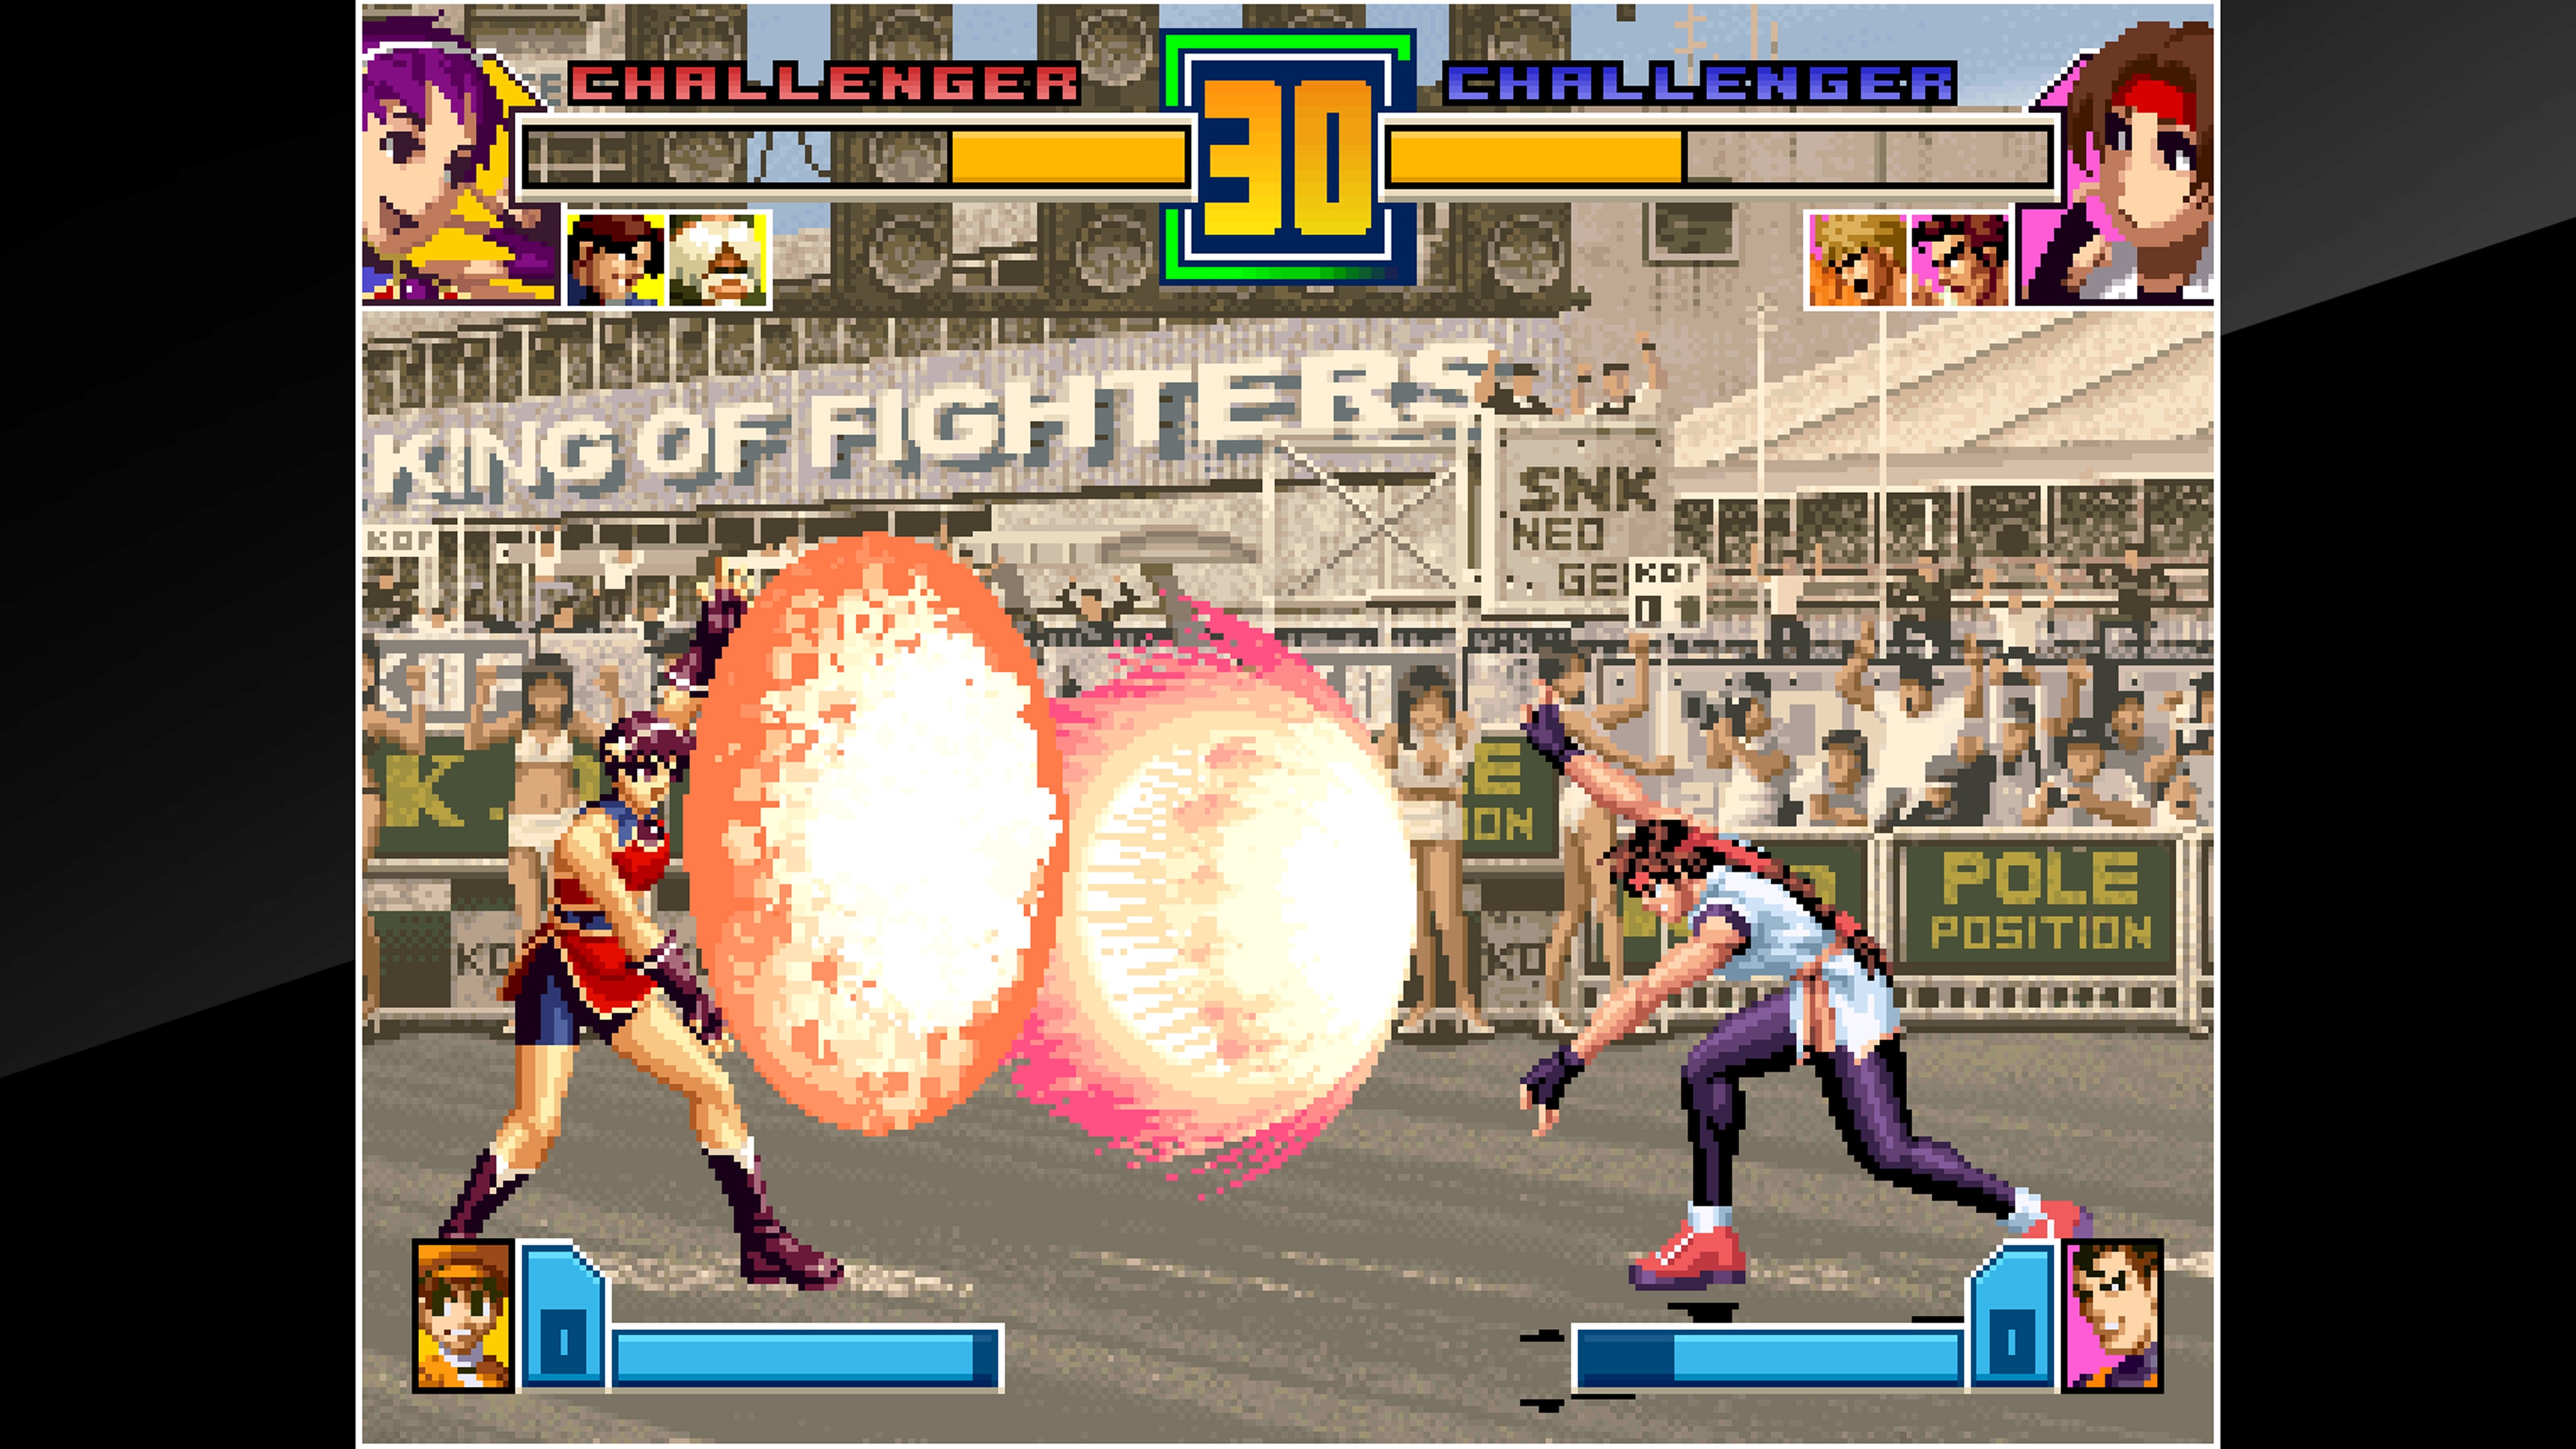 ACA NEOGEO The King of Fighters 2002 chega hoje (27) ao PS4